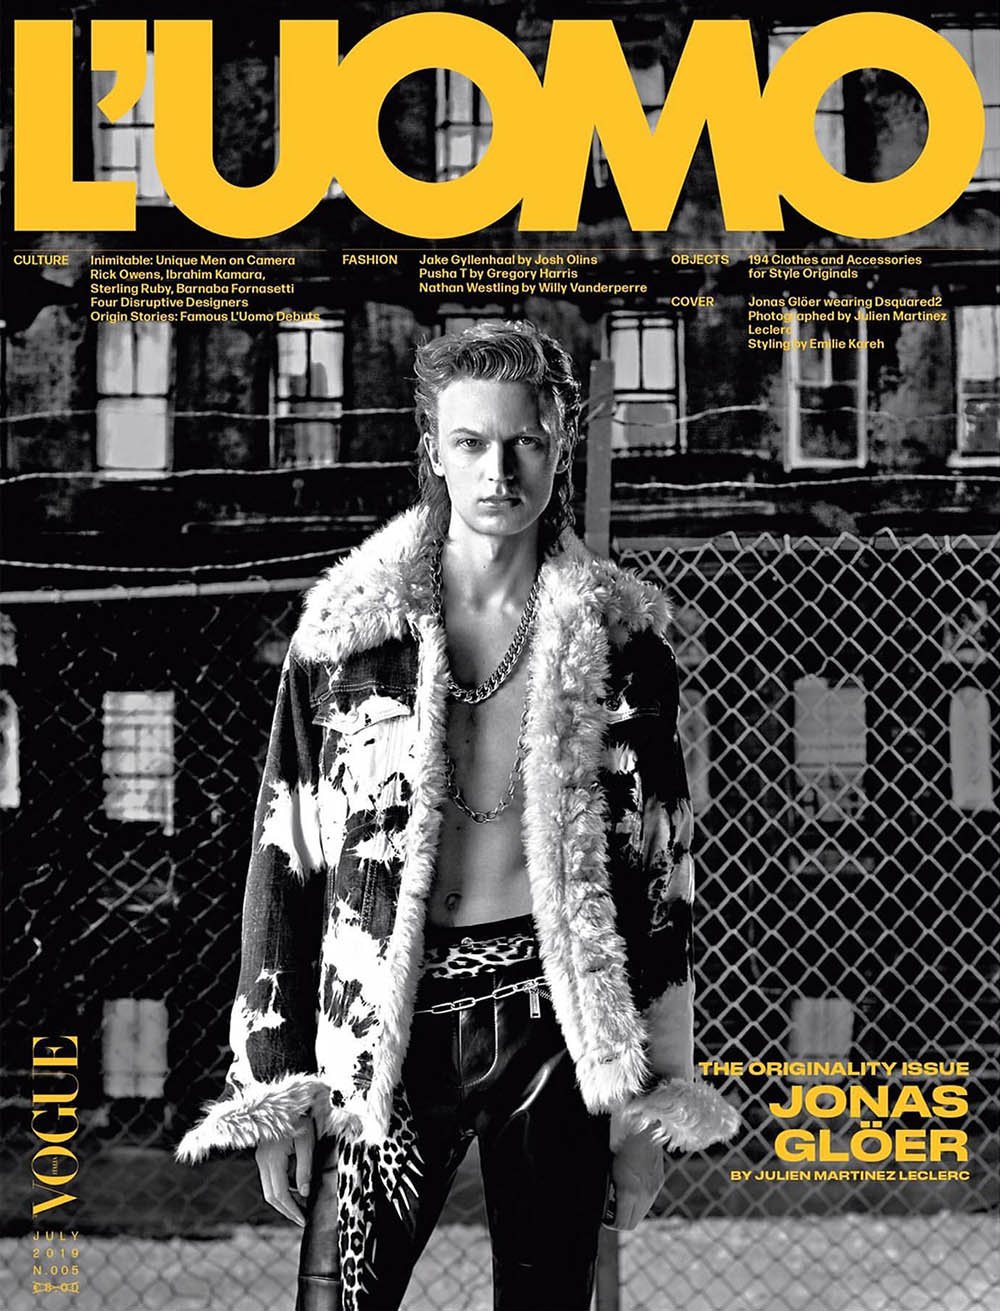 Jonas-Glöer-covers-L’Uomo-Vogue-July-2019-by-Julien-Martinez-Leclerc-1.jpg